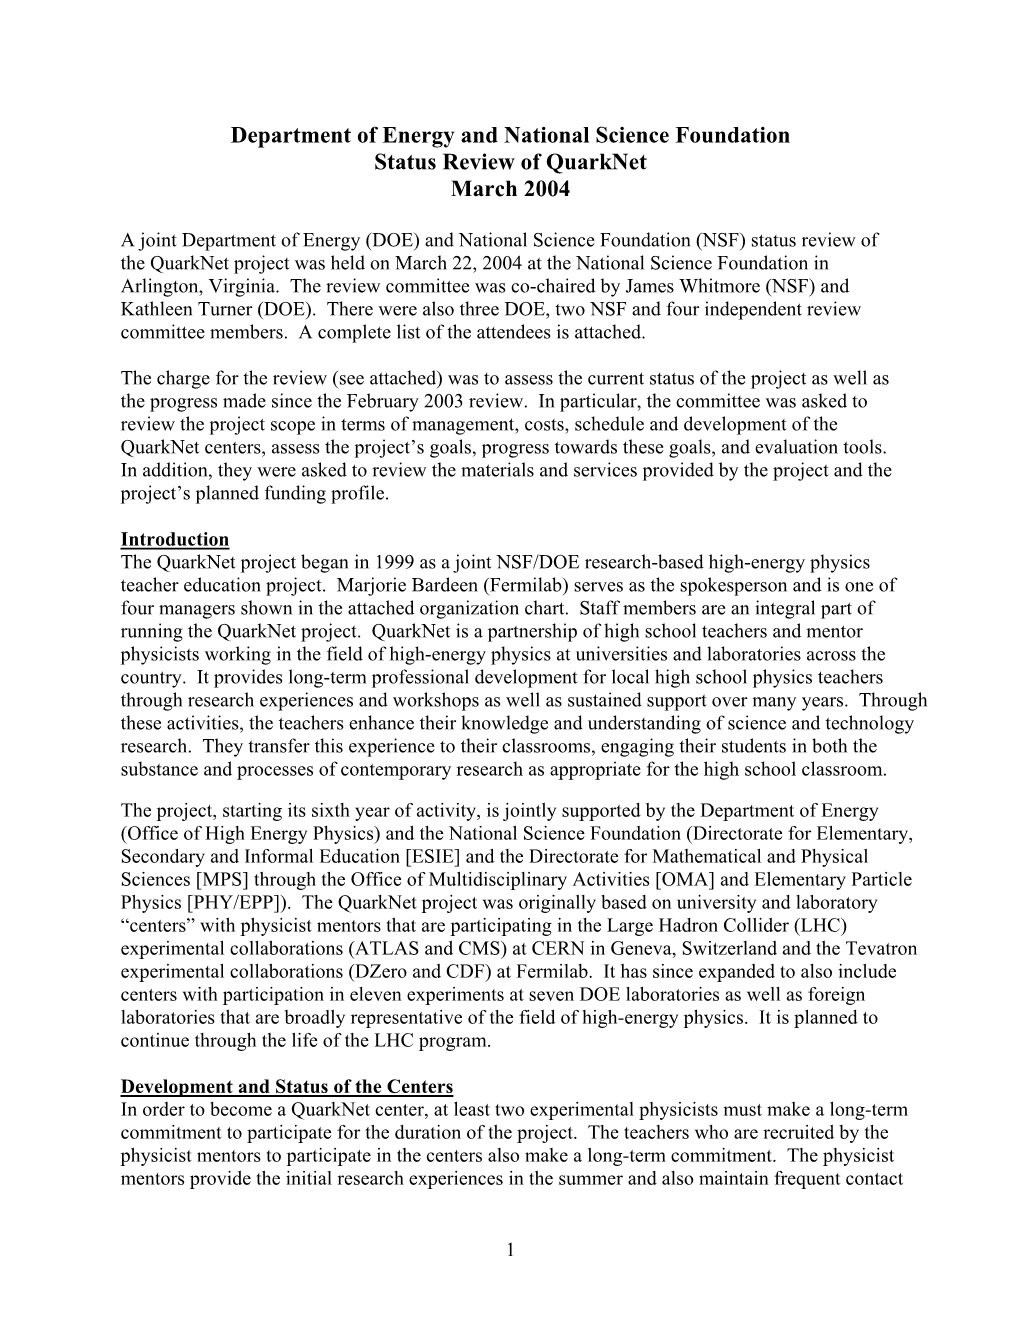 DOE/NSF Status Review of Quarknet